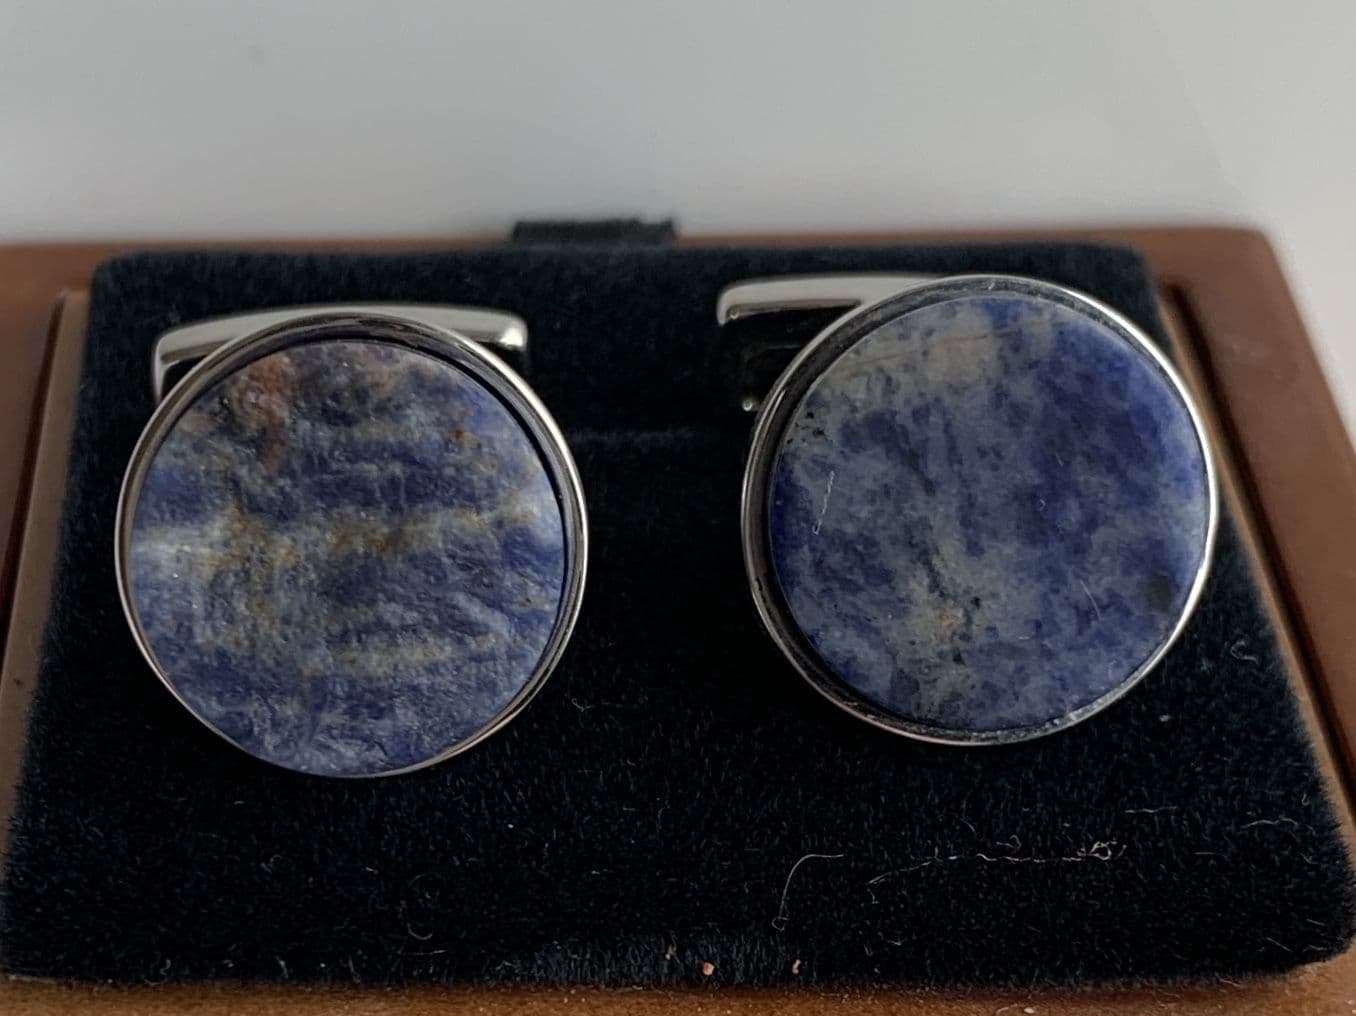 Silver plated round lapis lazuli cufflinks